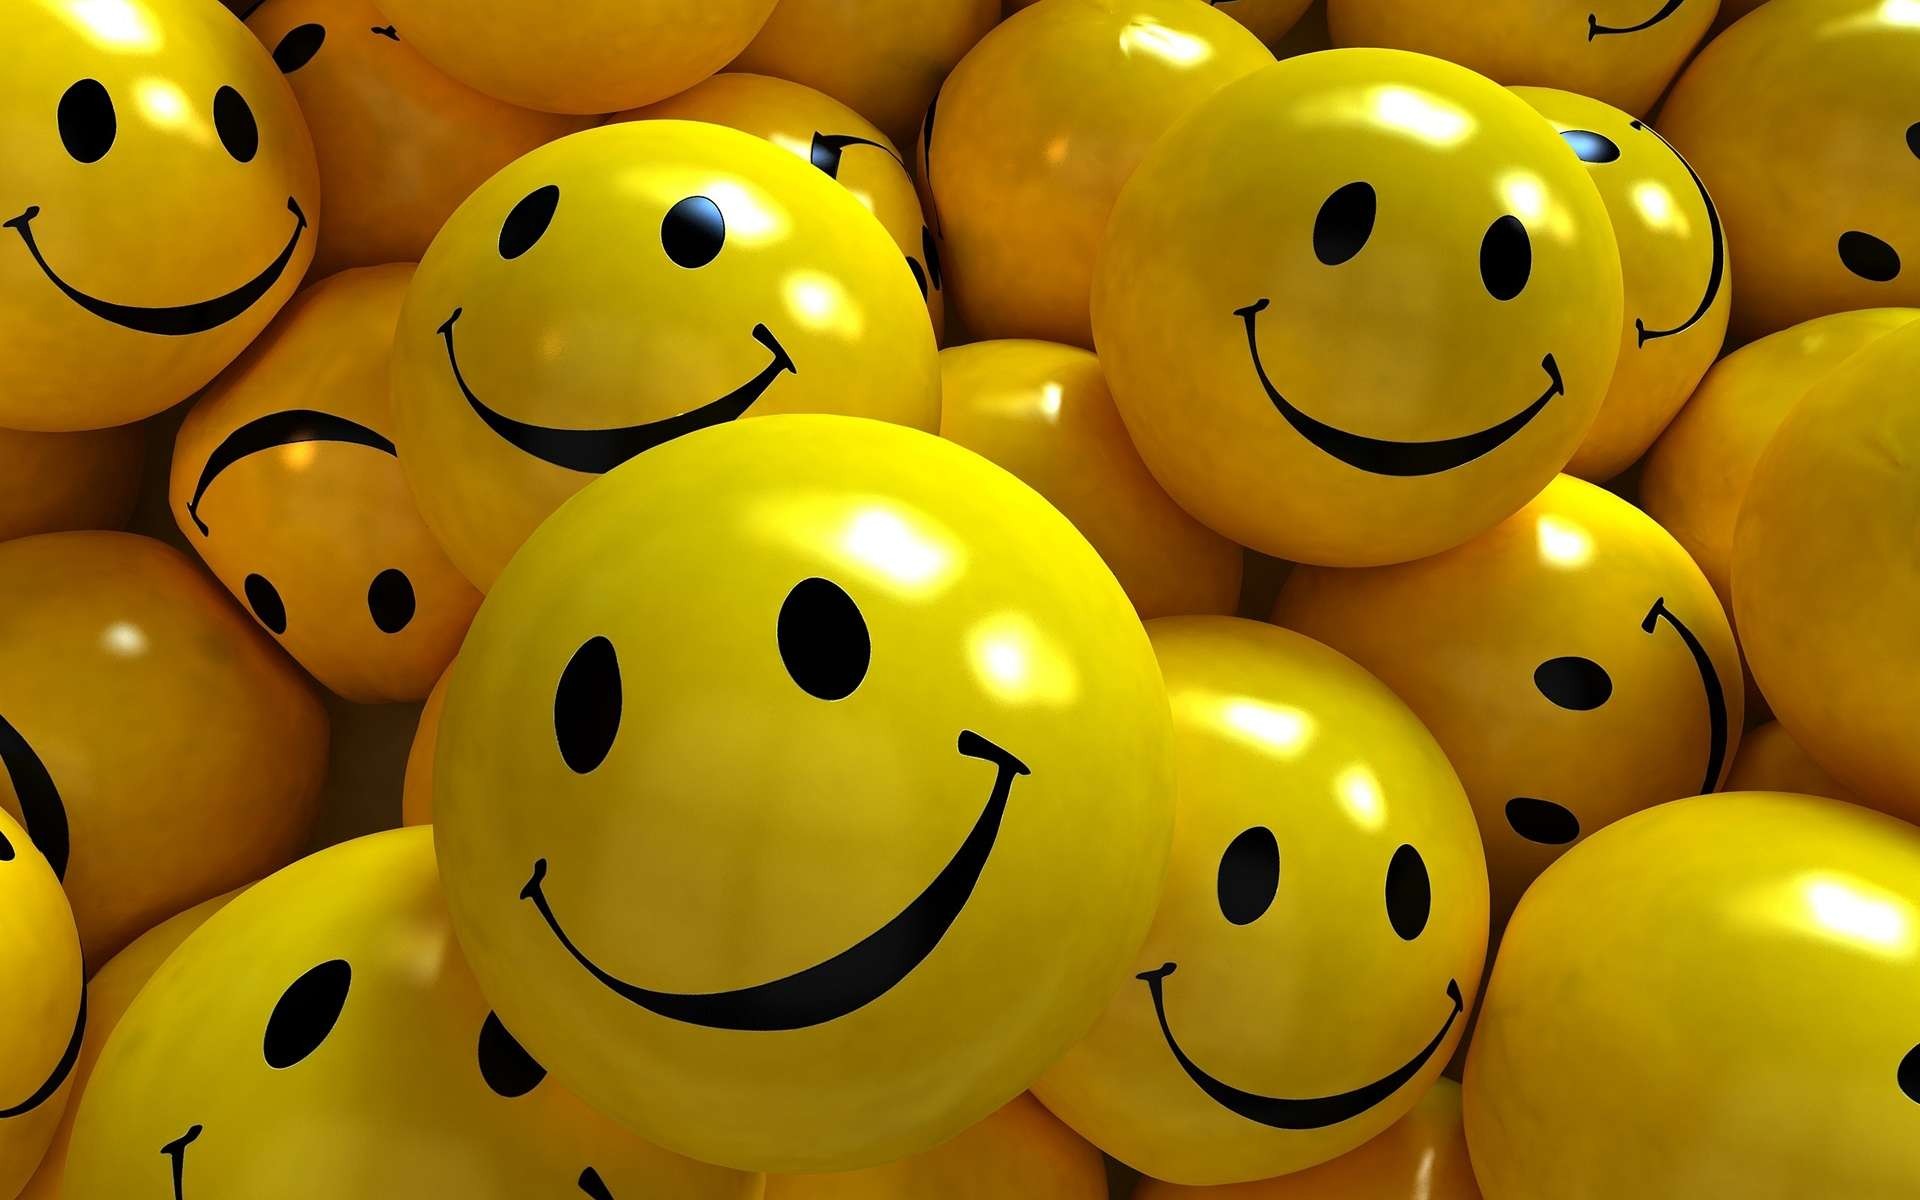 100+ Free Keep Smiling & Smiley Images - Pixabay